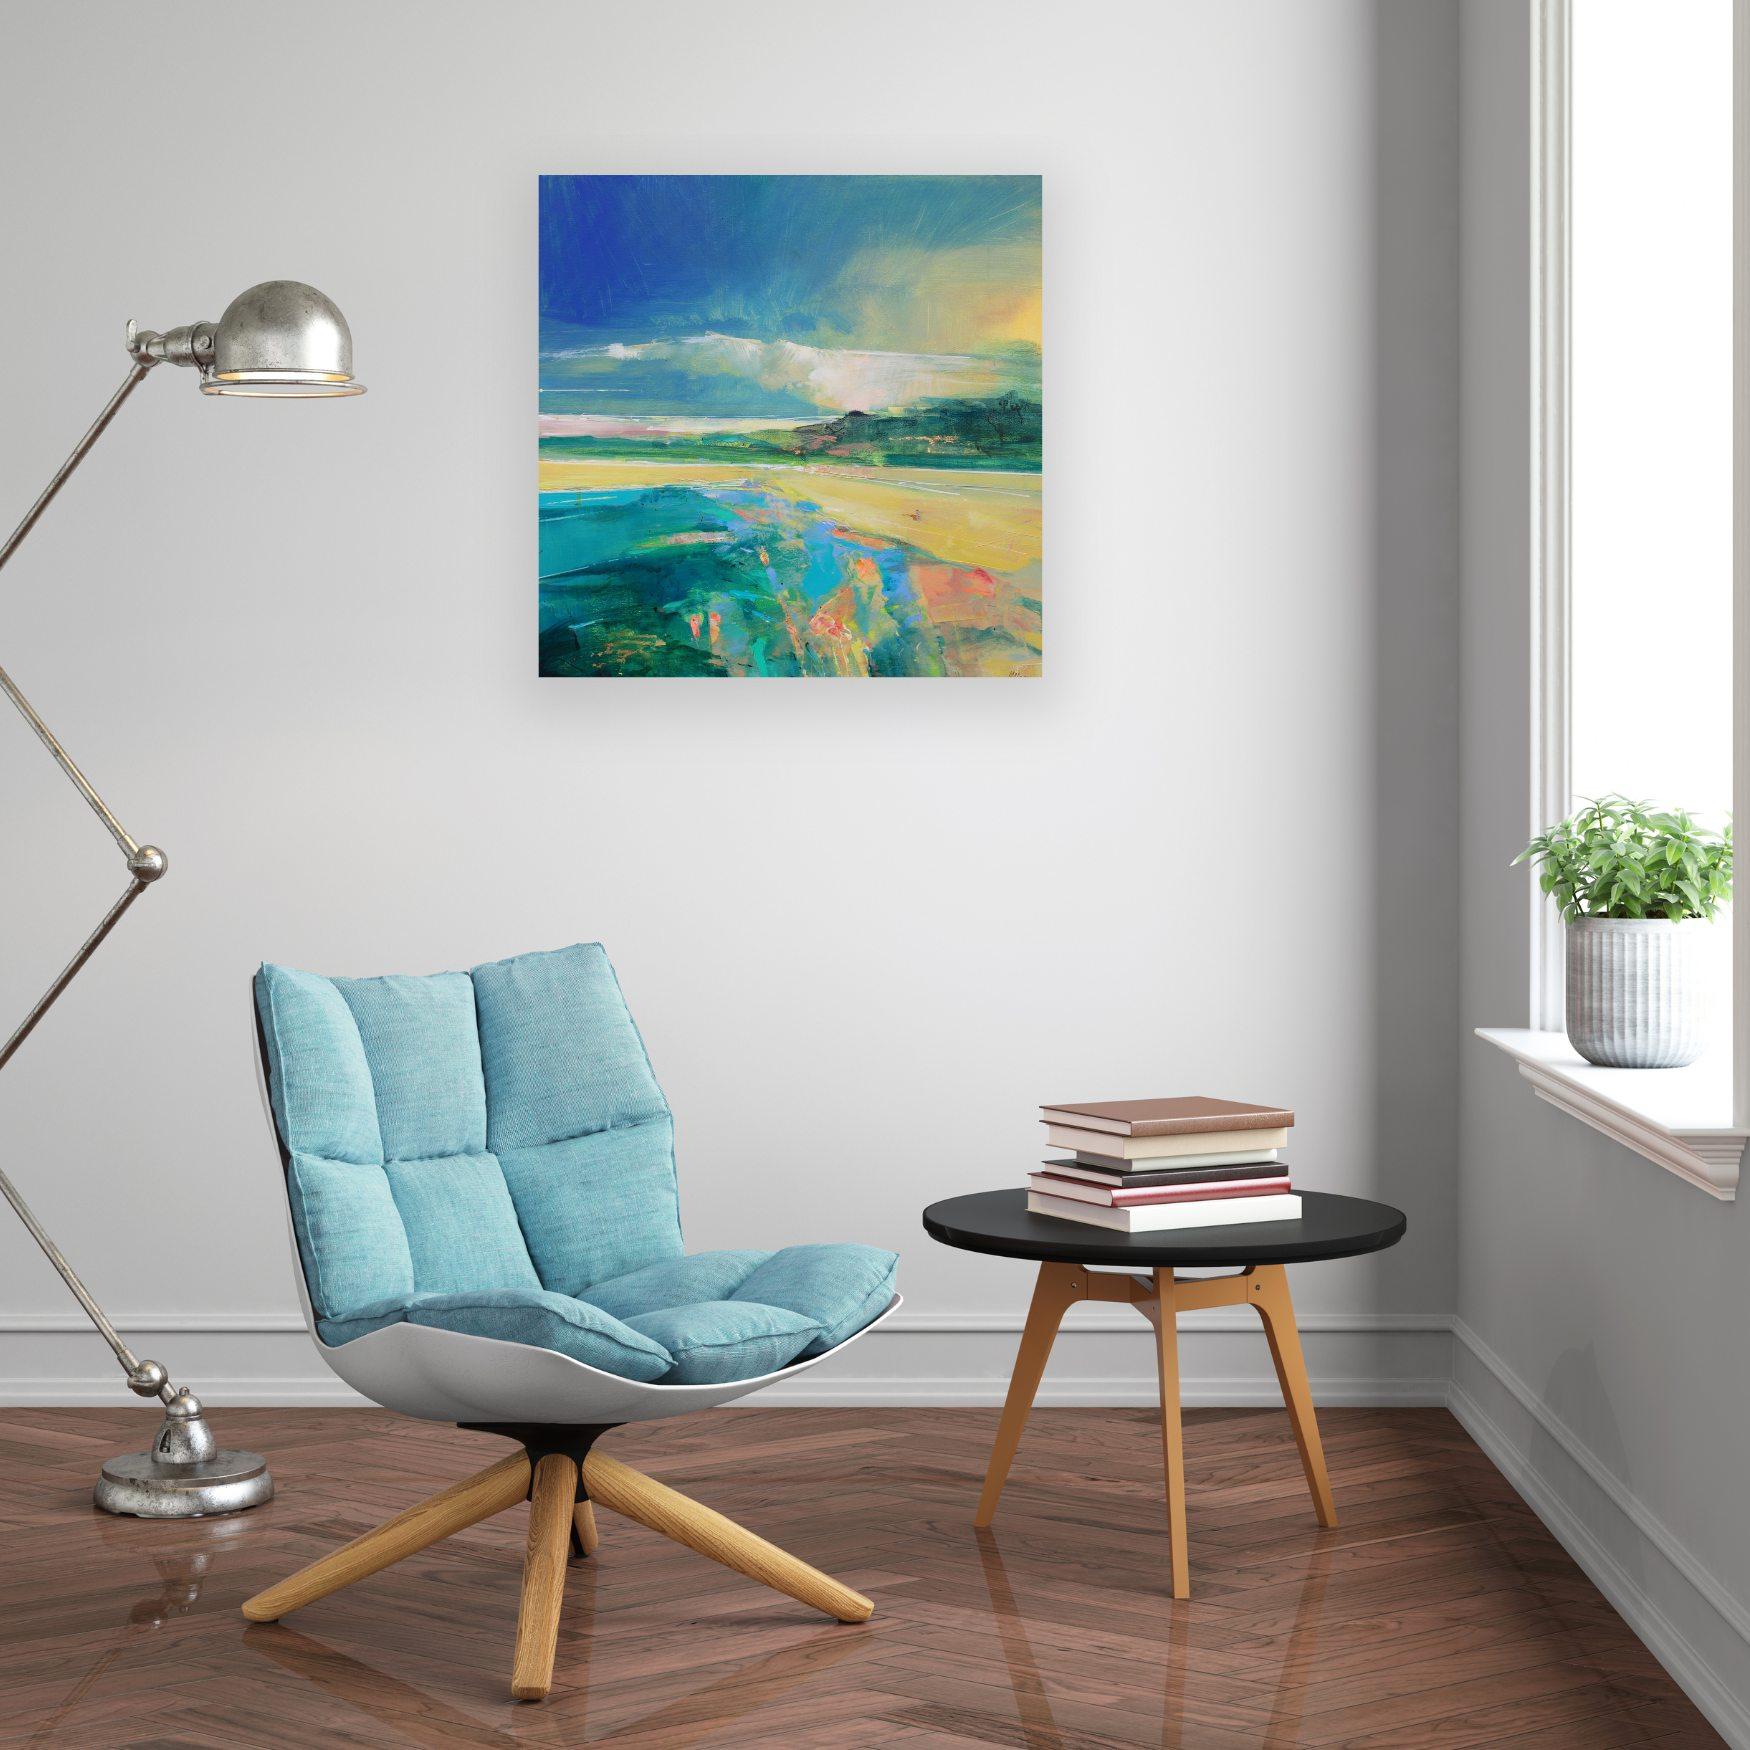 Enjoying Warm Glow 4-original abstract seascape painting- modern landscape art For Sale 1